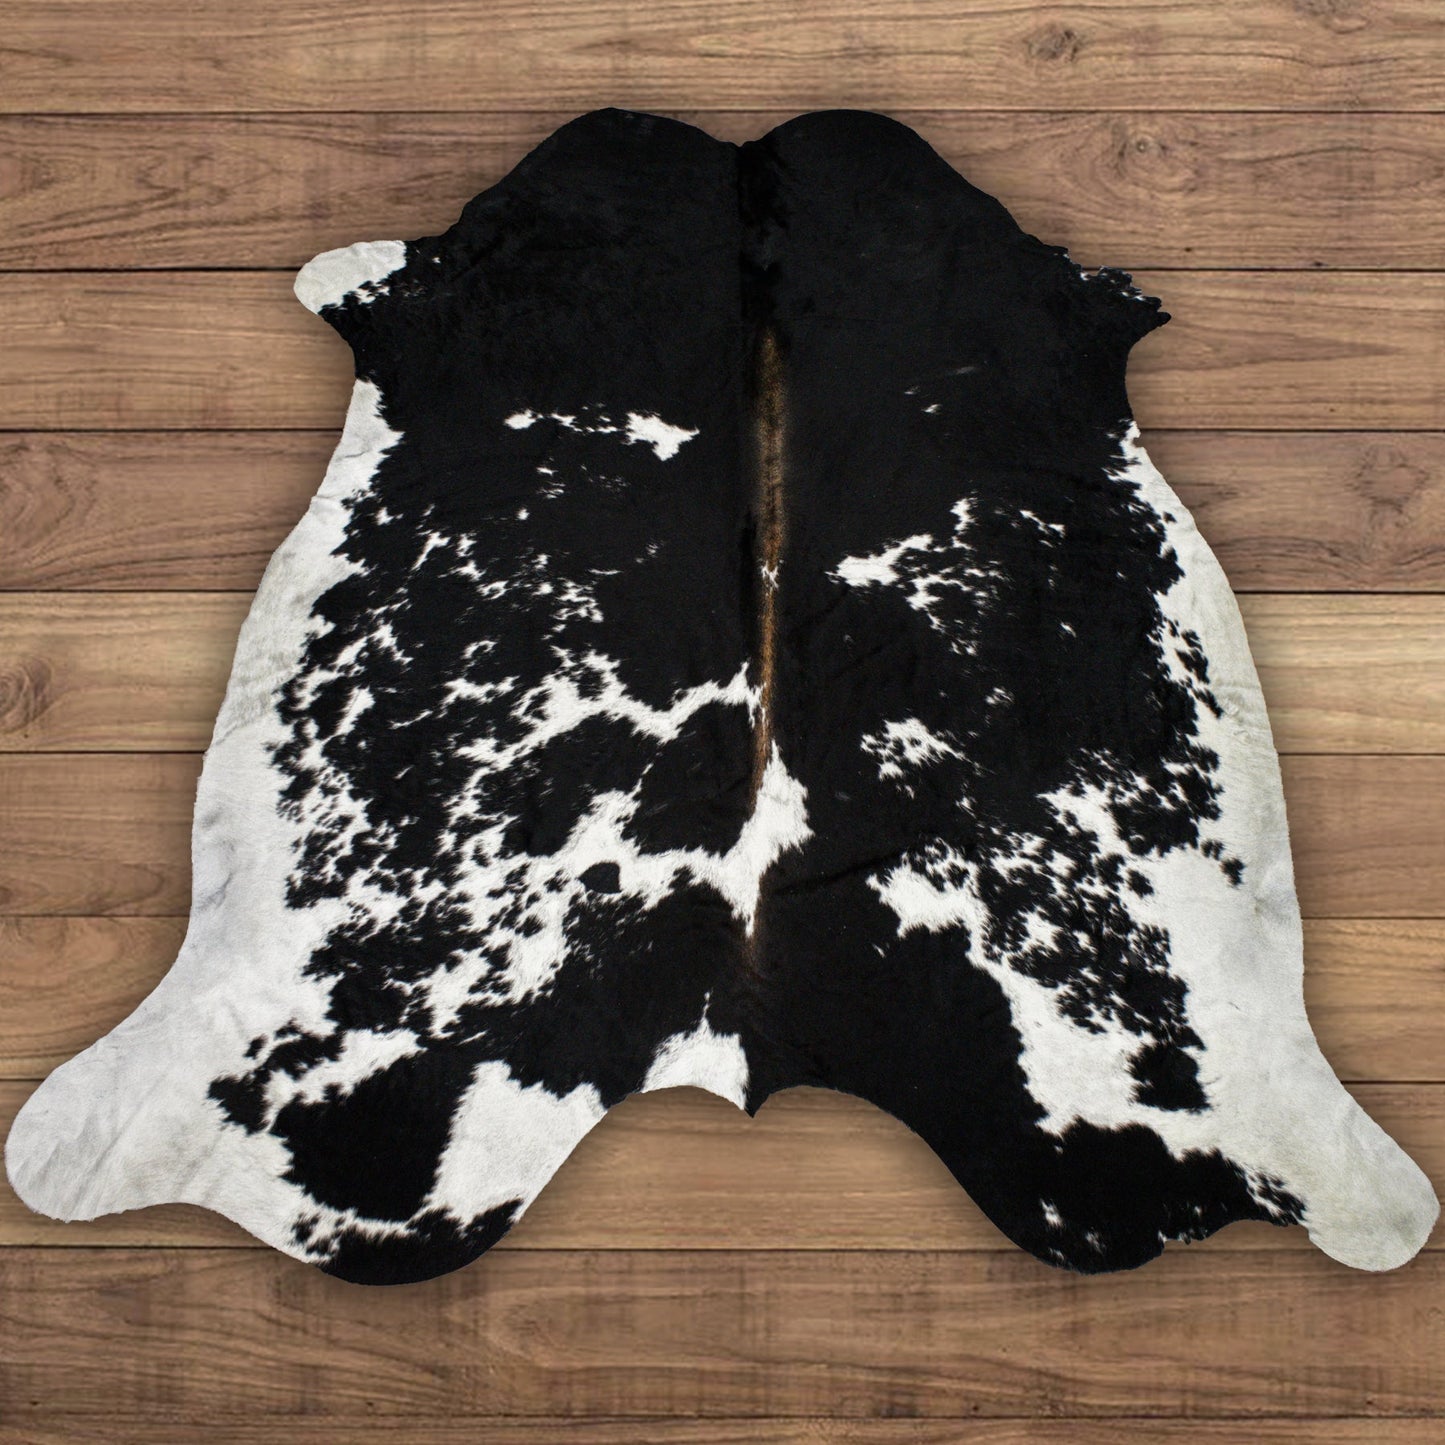 speckled cowhide rug 6.11x 8.3 ft---4478 - Rodeo Cowhide Rugs